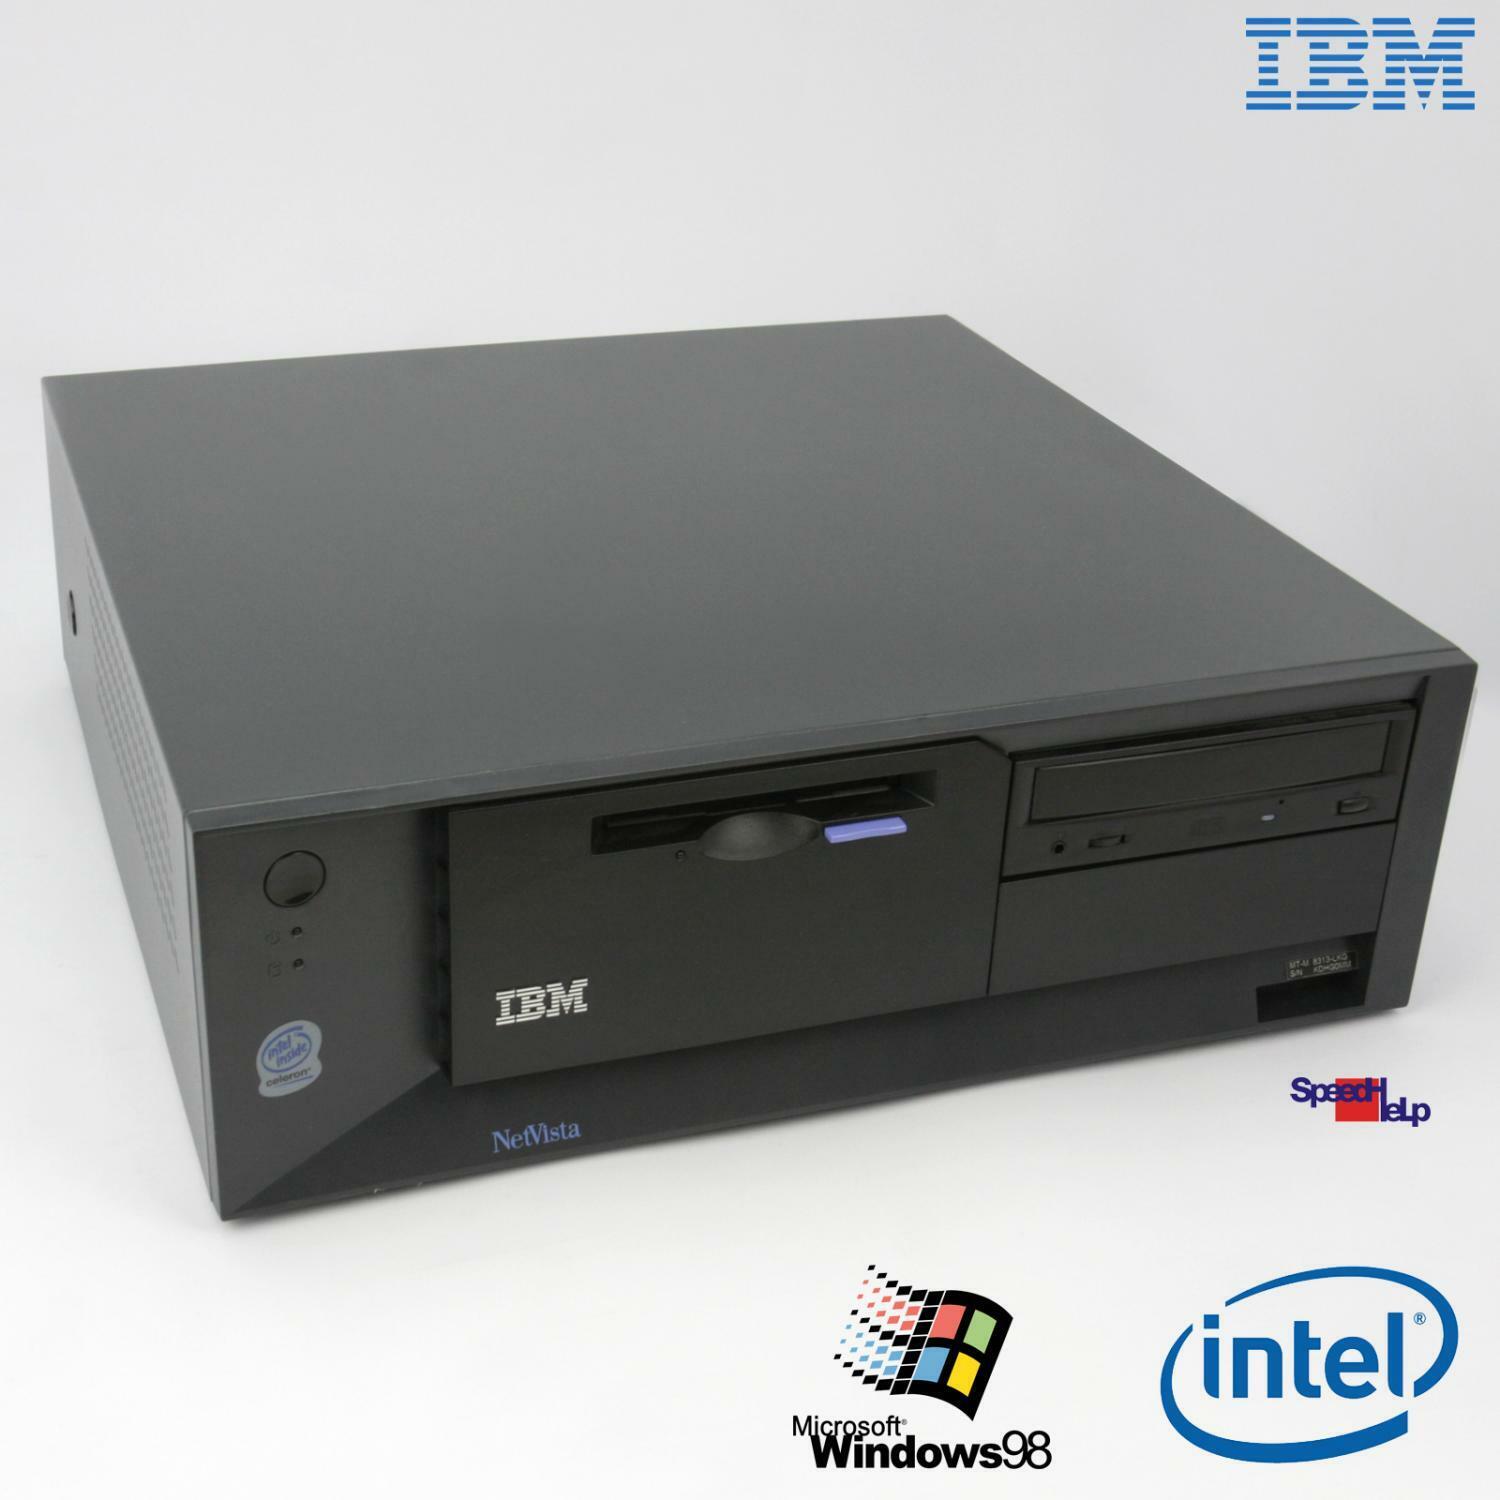 IBM Netvista A30 8313 Computer PC Parallel RS-232 Celeron 1700MHZ Windows 98 Lan